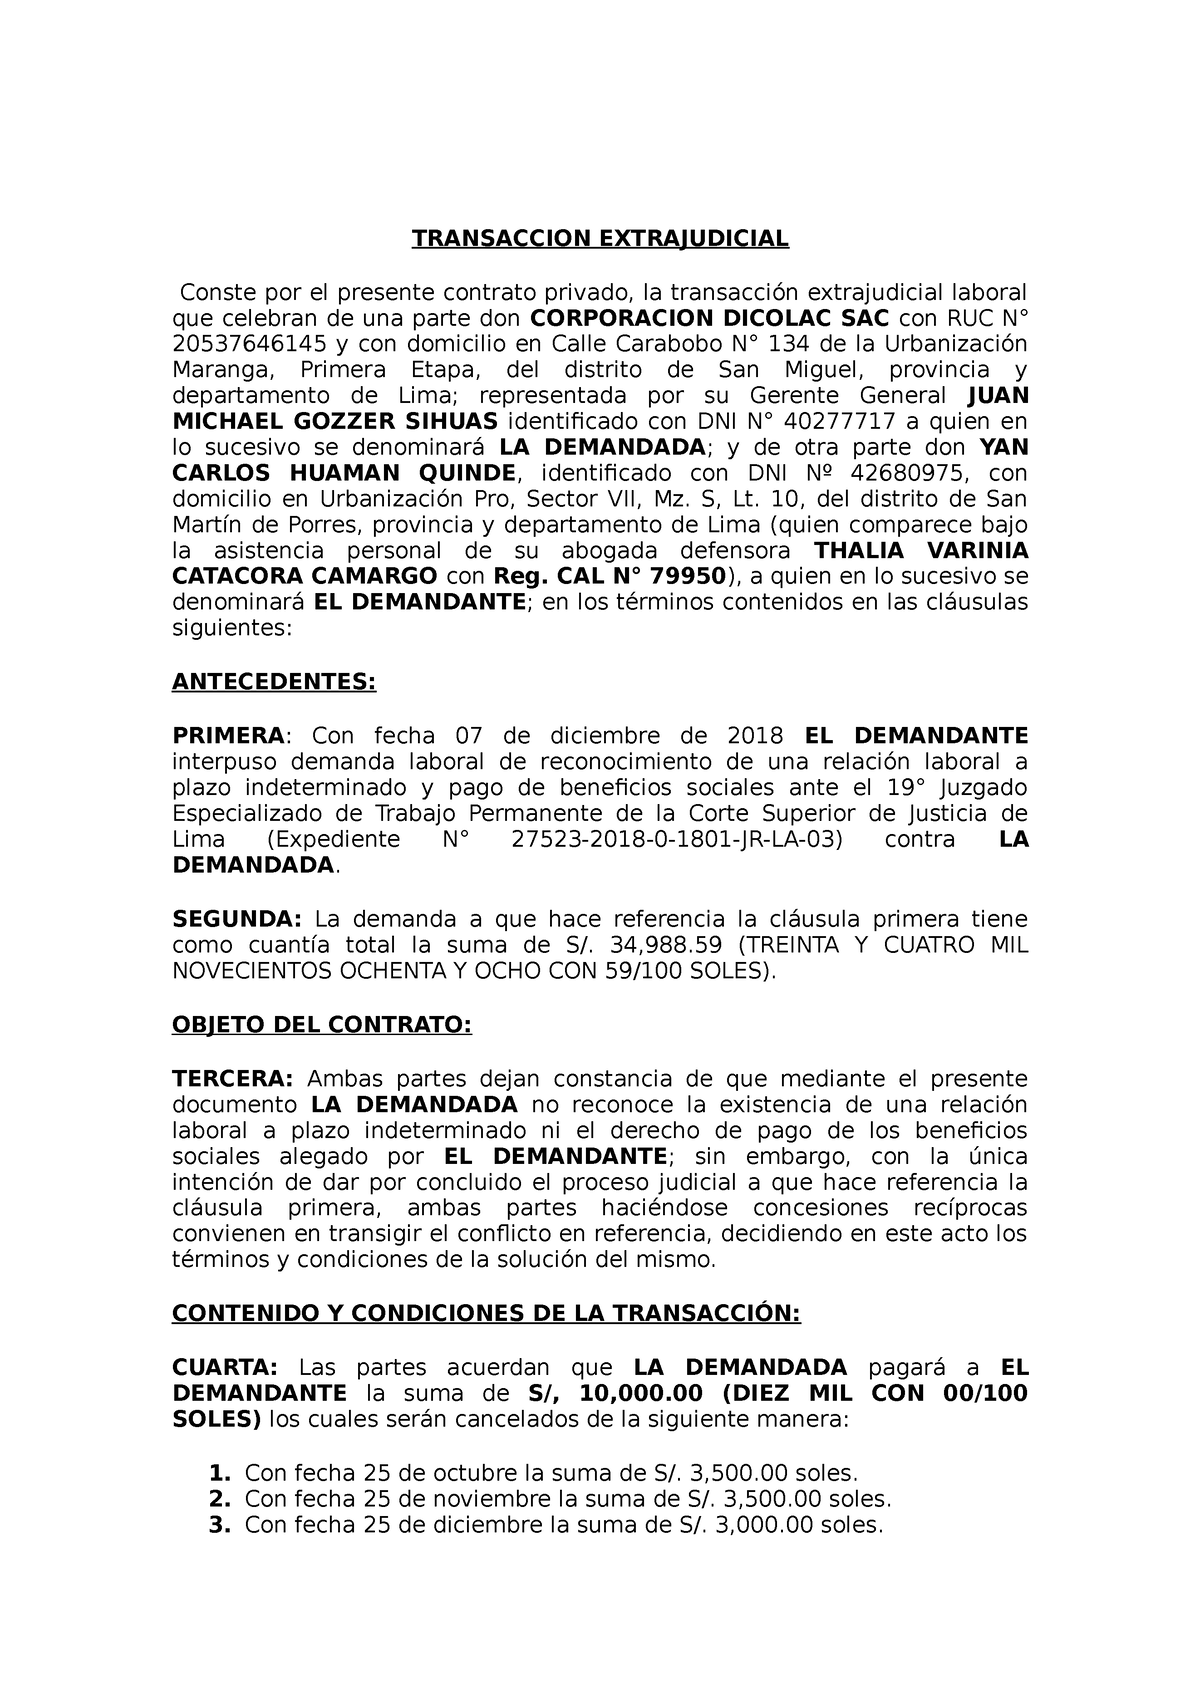 431382926 Modelo DE Transaccion Extrajudicial Laboral - TRANSACCION  EXTRAJUDICIAL Conste por el - Studocu